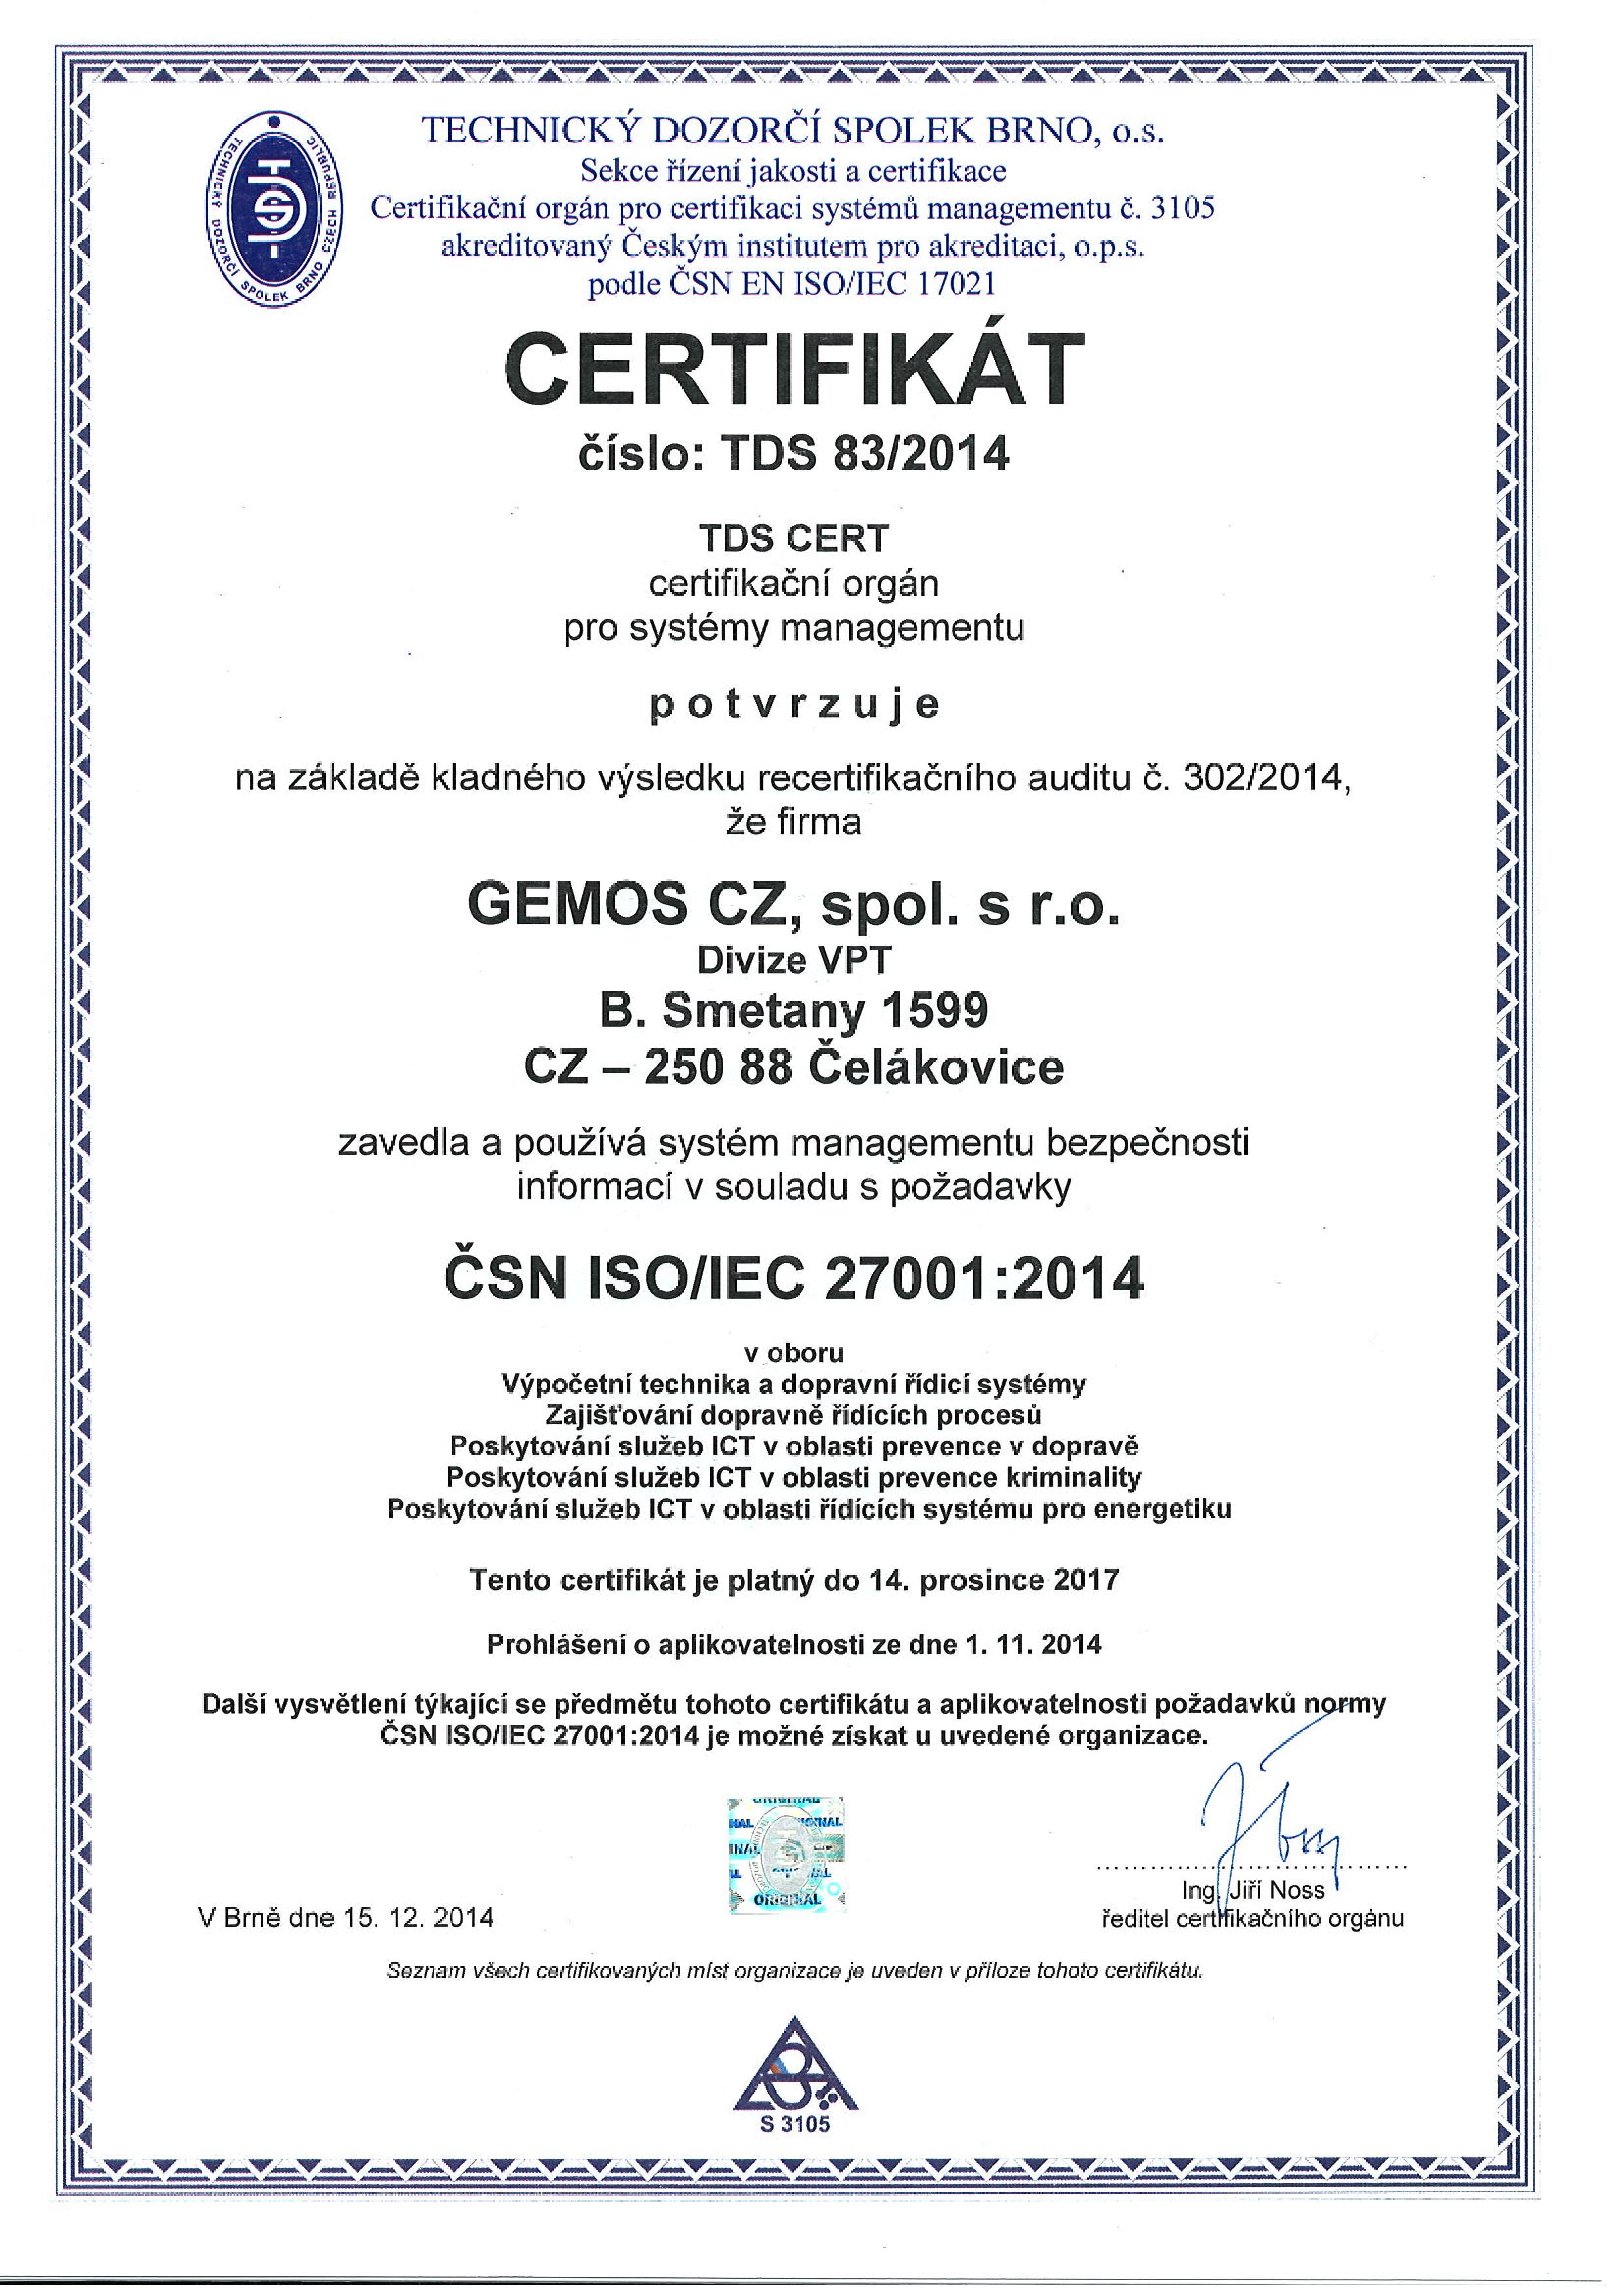  Certificate ČSN ISO/IEC 27001 granted to GEMOS CZ company 